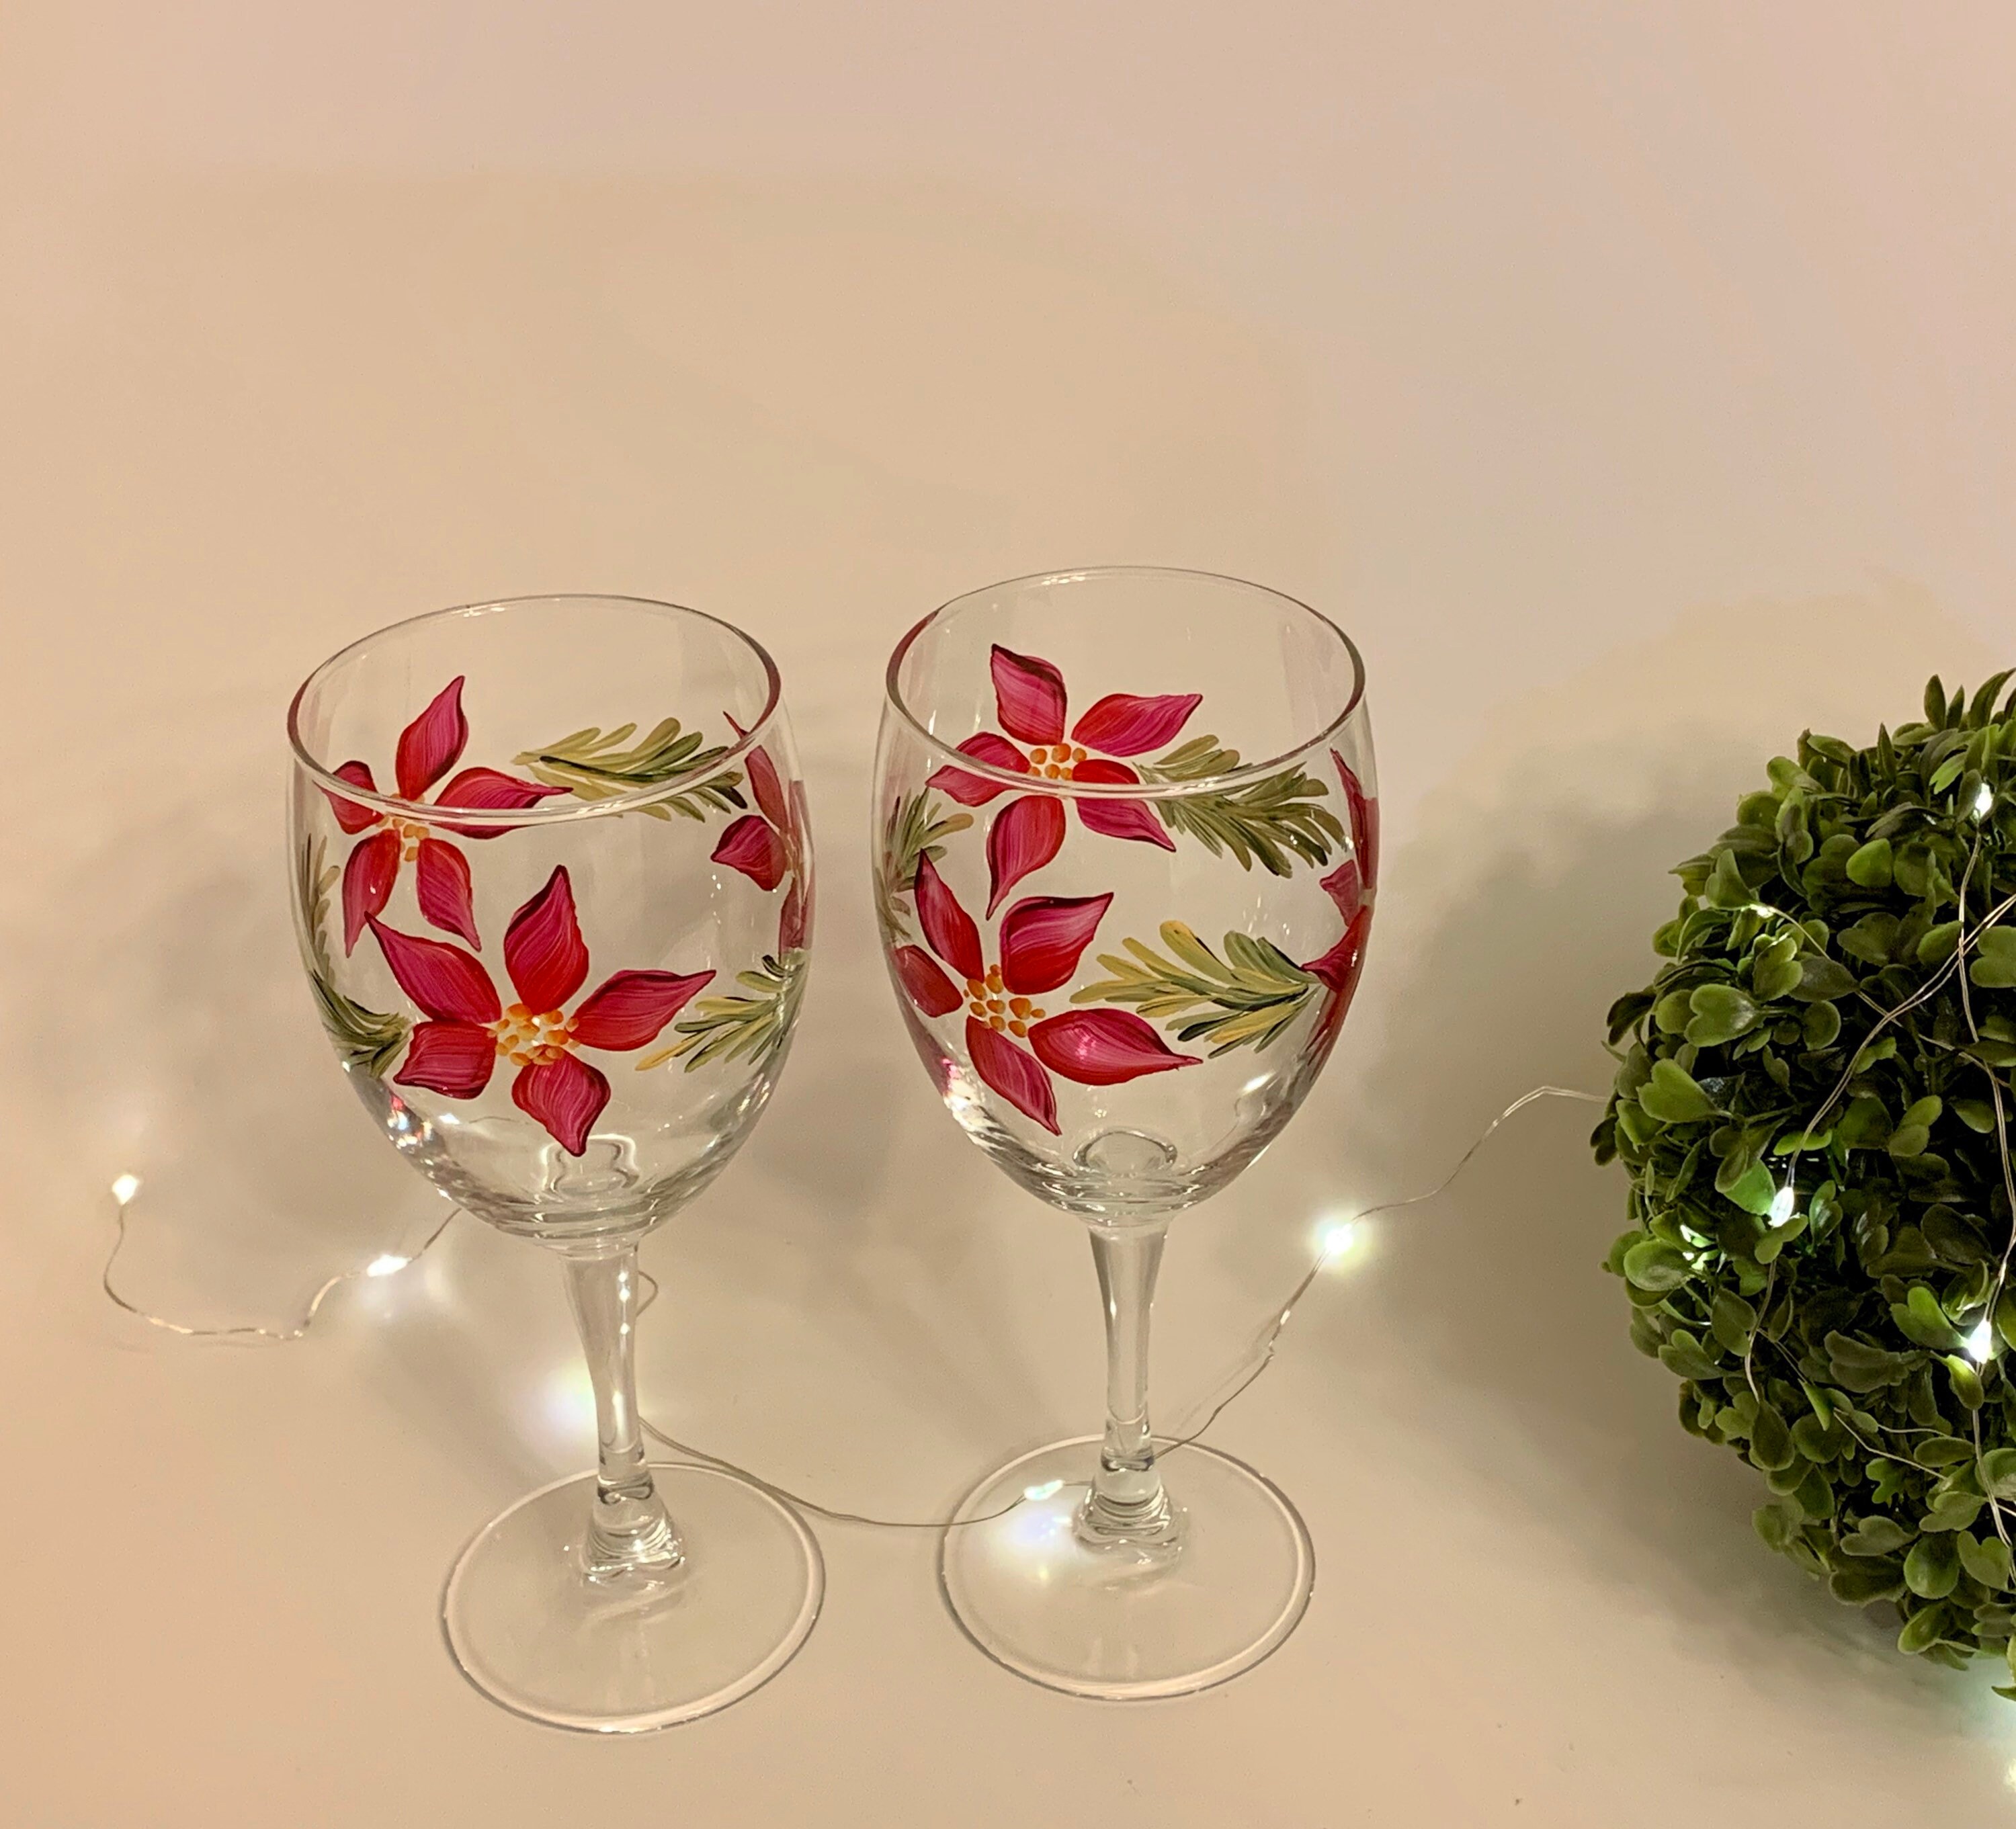 Elcio 17 oz. Christmas Joy Stemmed Wine Glass with Matching Gift Box